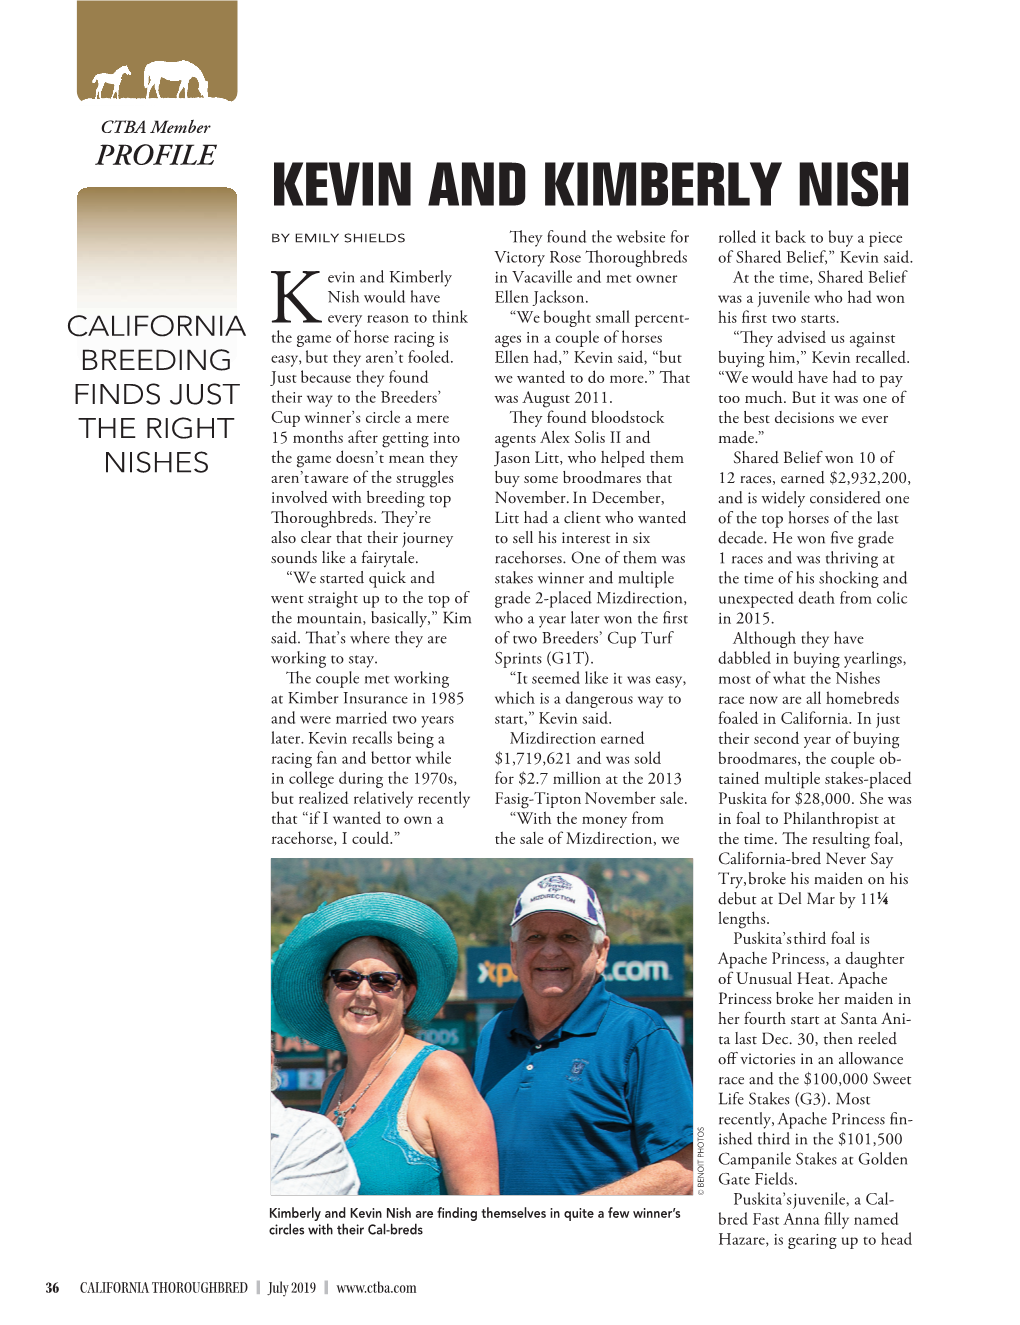 Kevin and Kimberly Nish